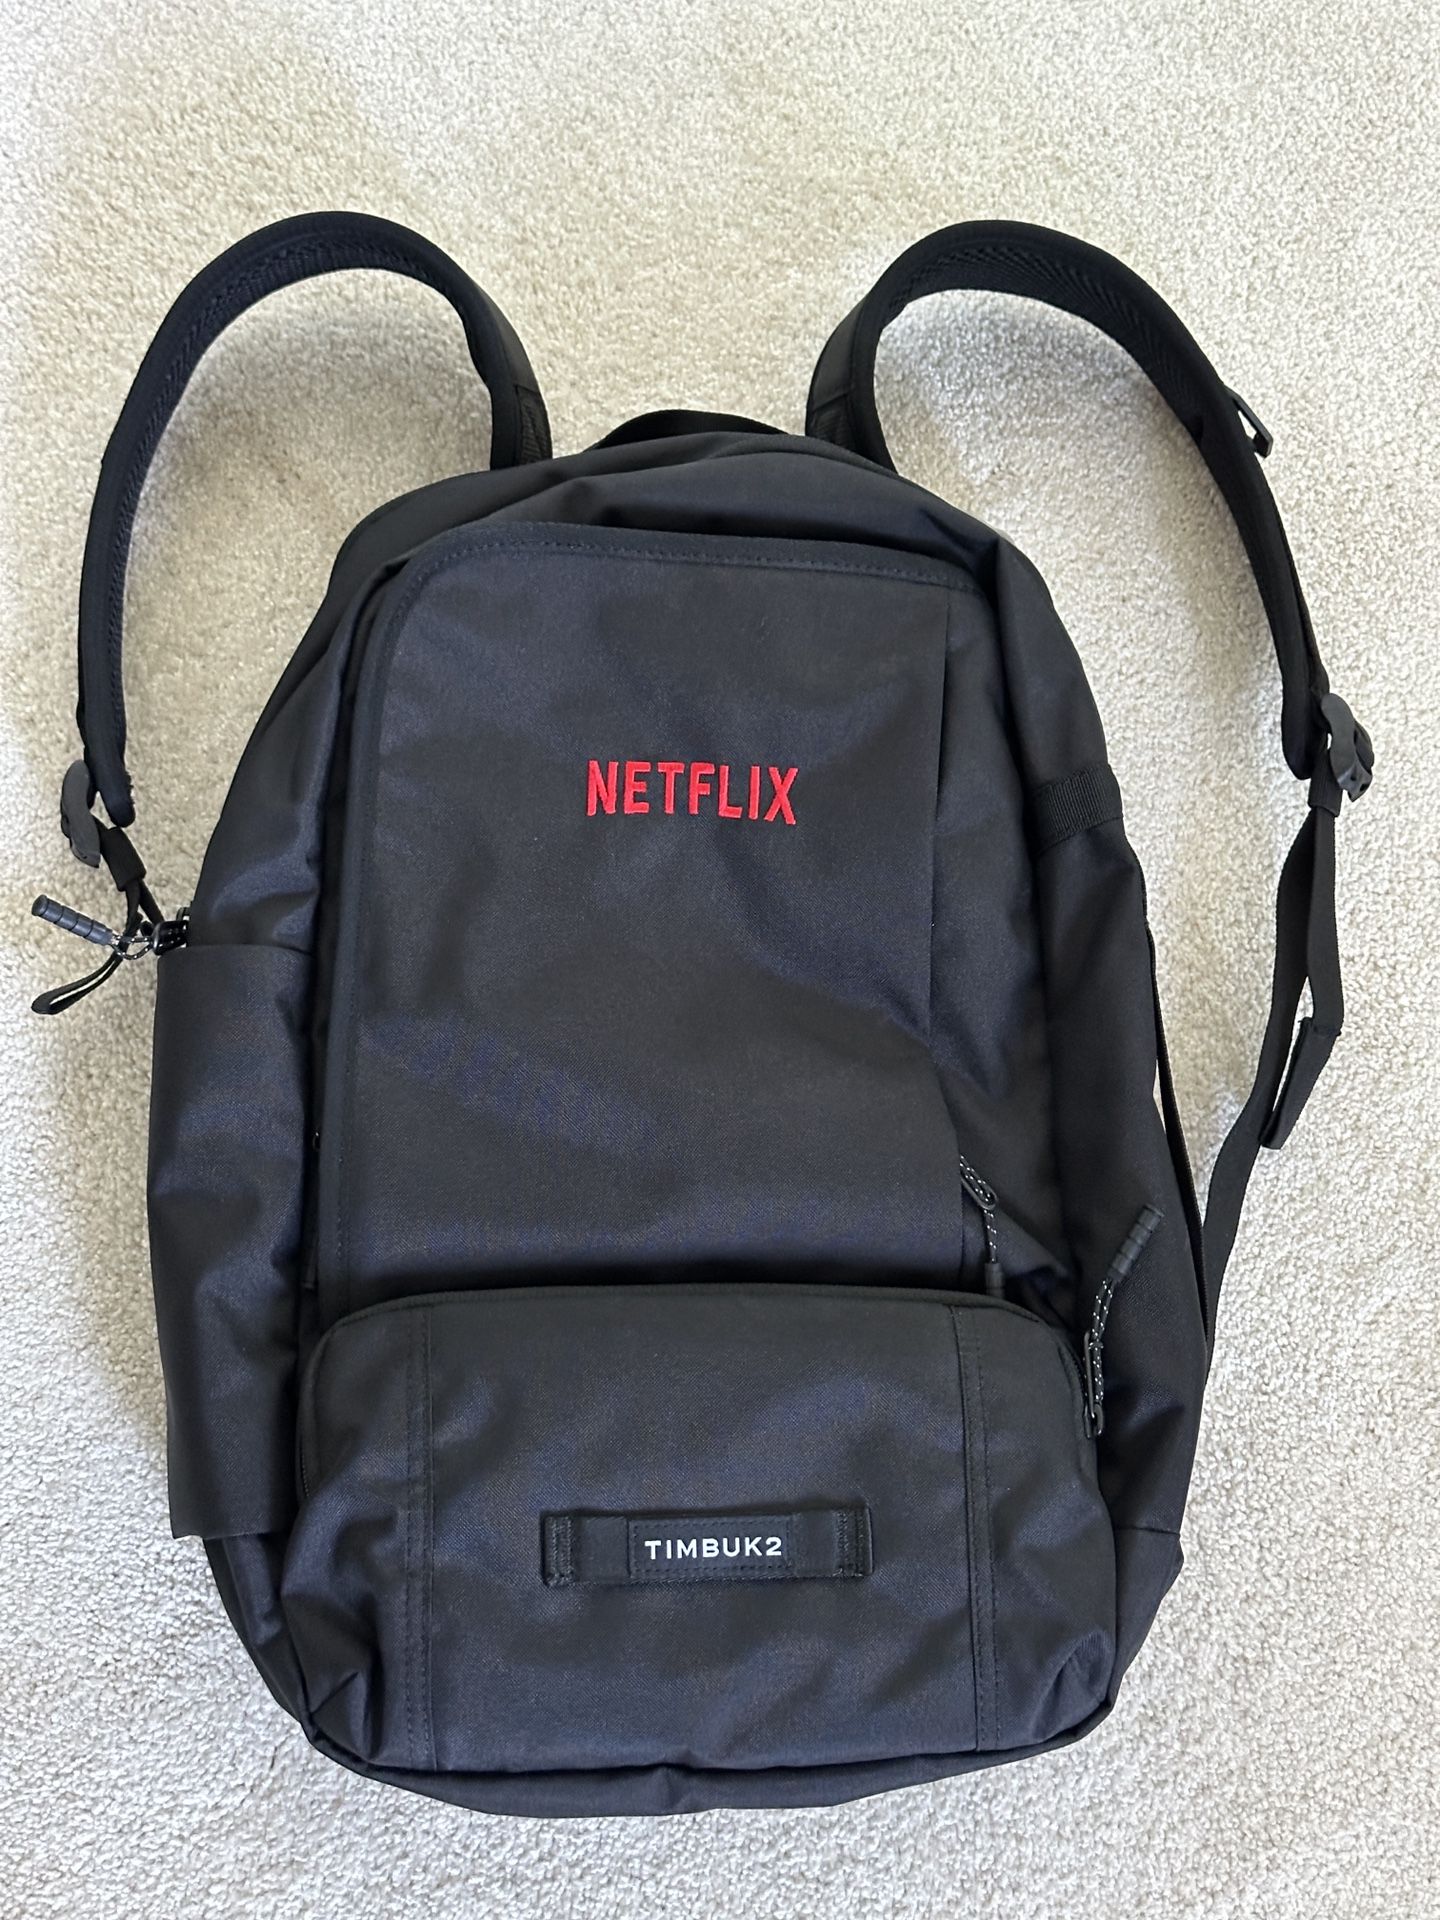 Netflix branded Timbuk2 Laptop Backpack